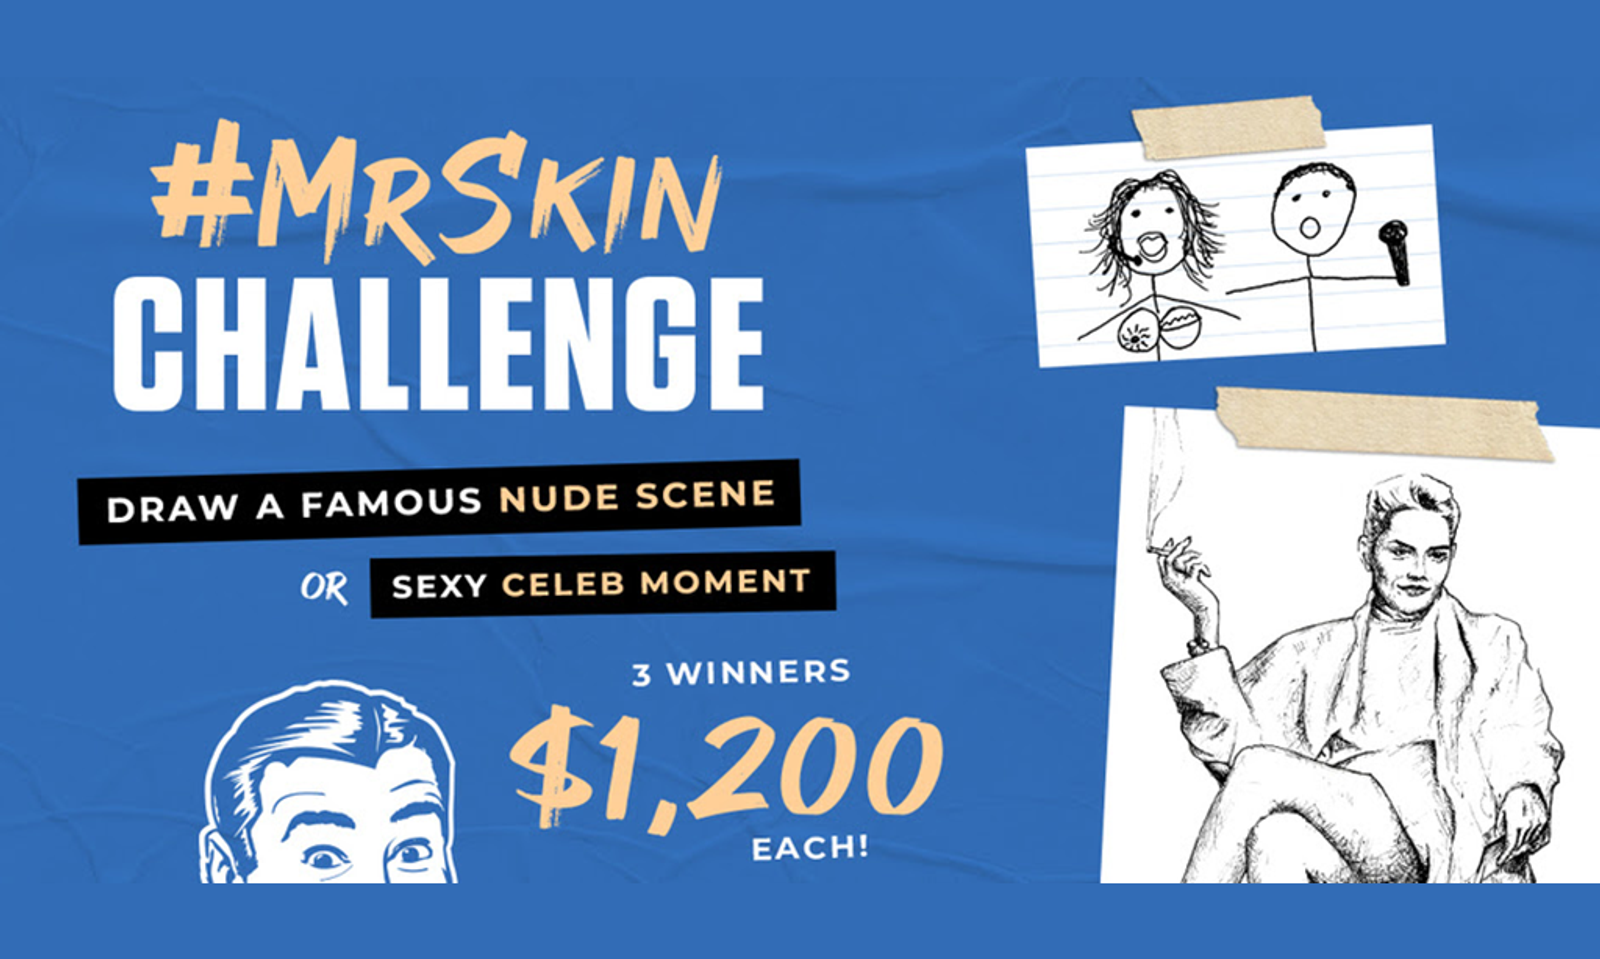 Mr. Skin's #MrSkinChallenge Is A $1,200 Stimulus Relief Contest